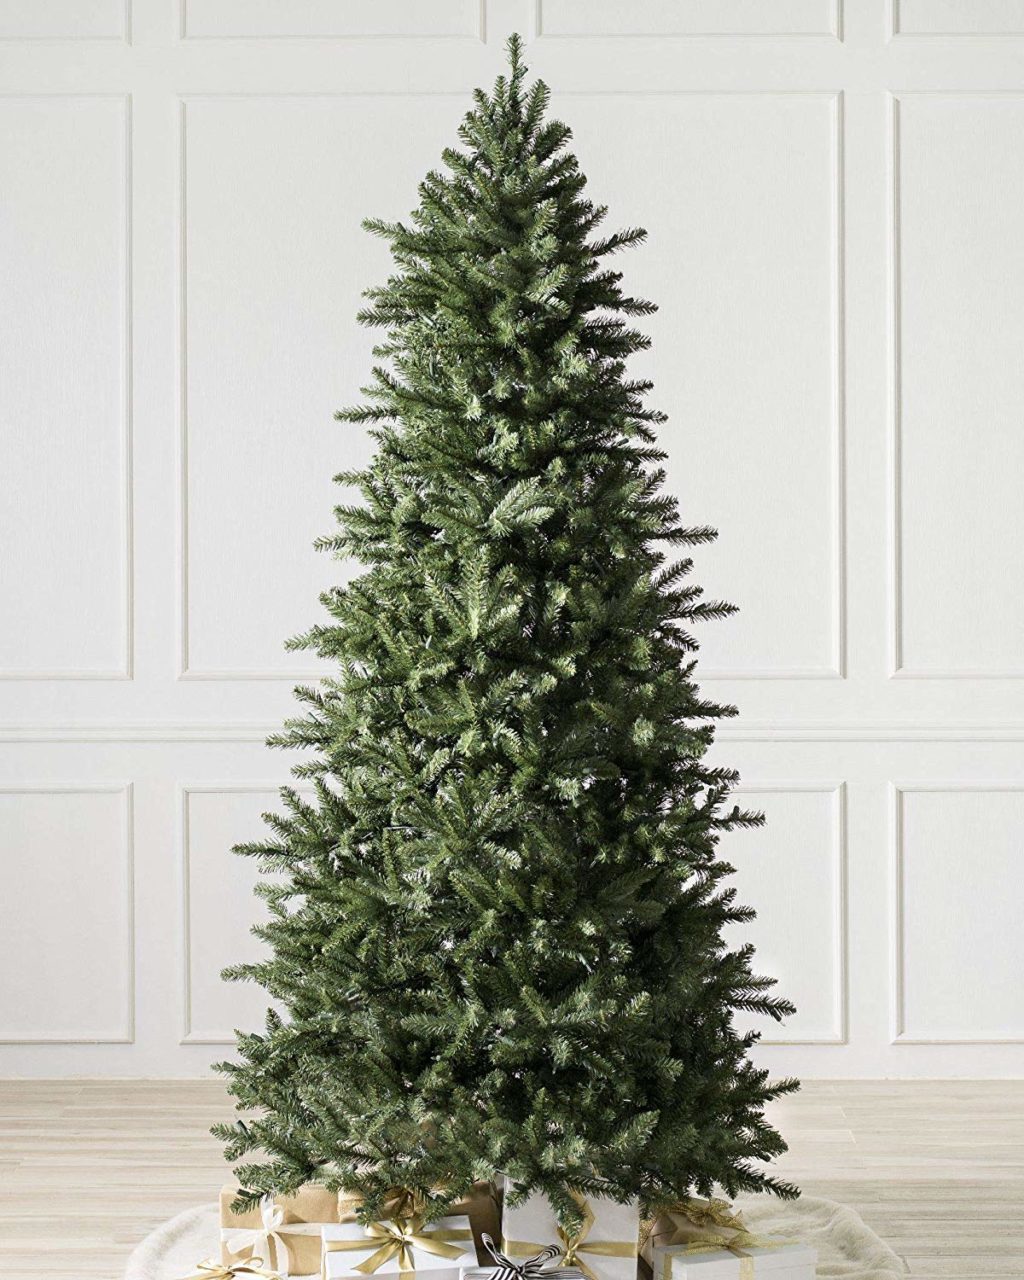 The BEST Artificial Christmas Trees | Balsam Hill Berkshire Mountain Fir Artificial Christmas Tree, 7.5 Feet